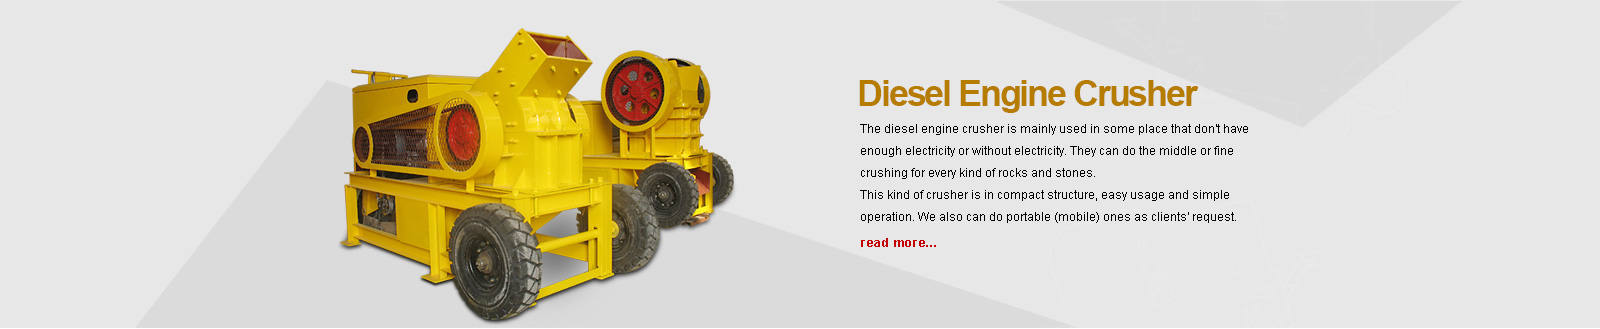 Diesel Engine Crusher